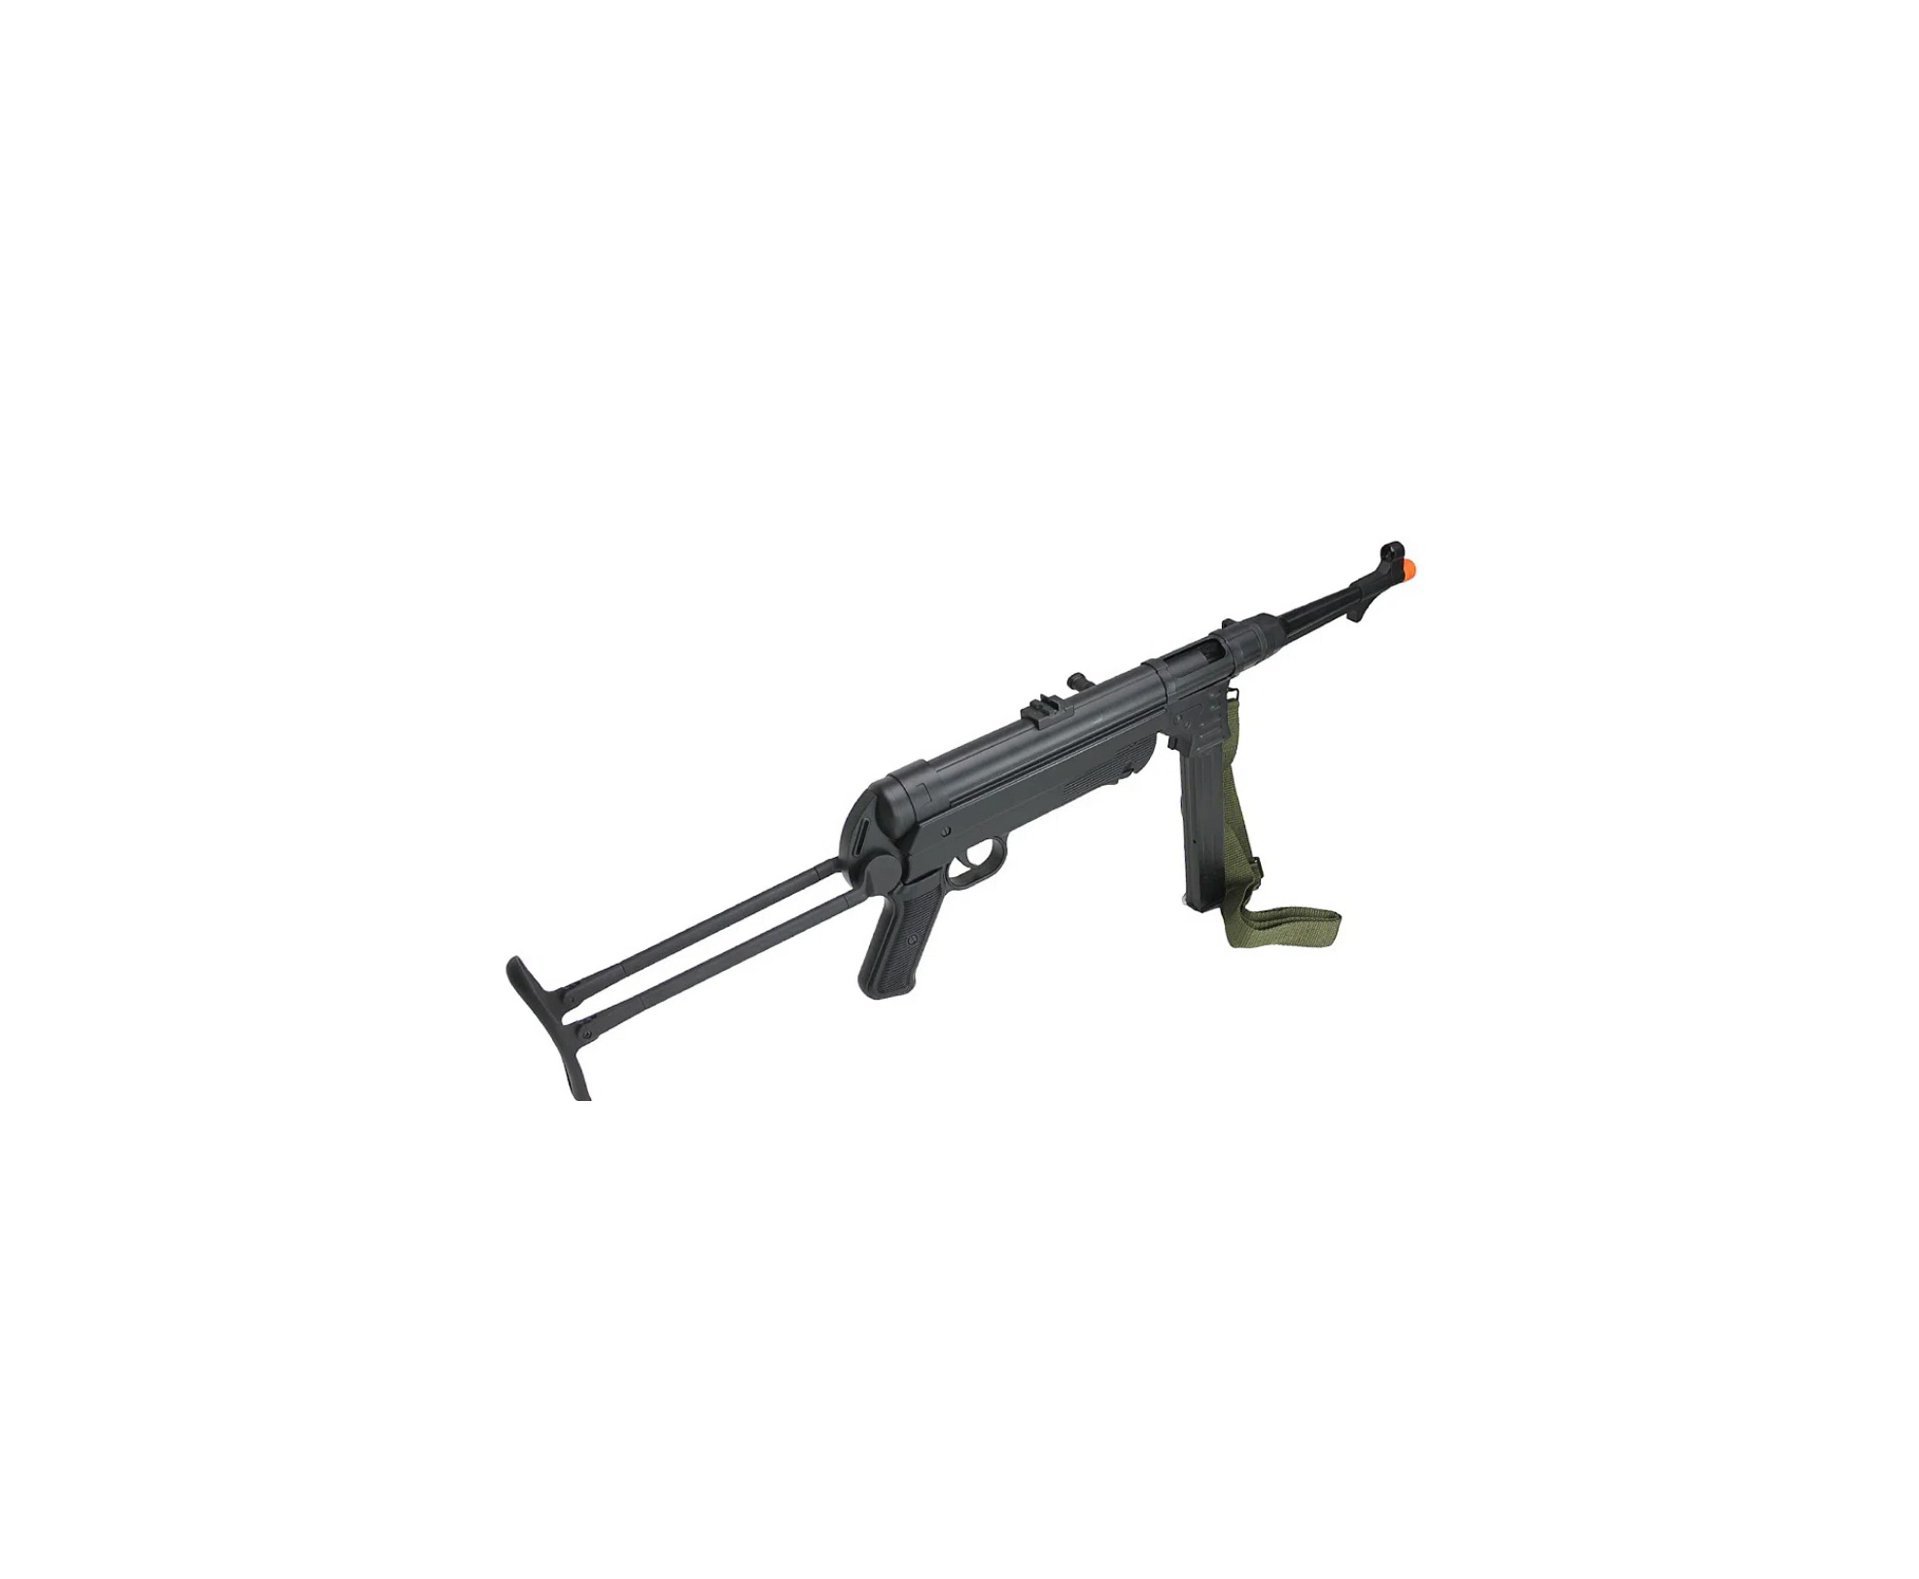 Rifle Sub Metralhadora de Airsoft AEG MP40 Full Metal Black - AGM + Bateria + Carregador + BBS + Capa